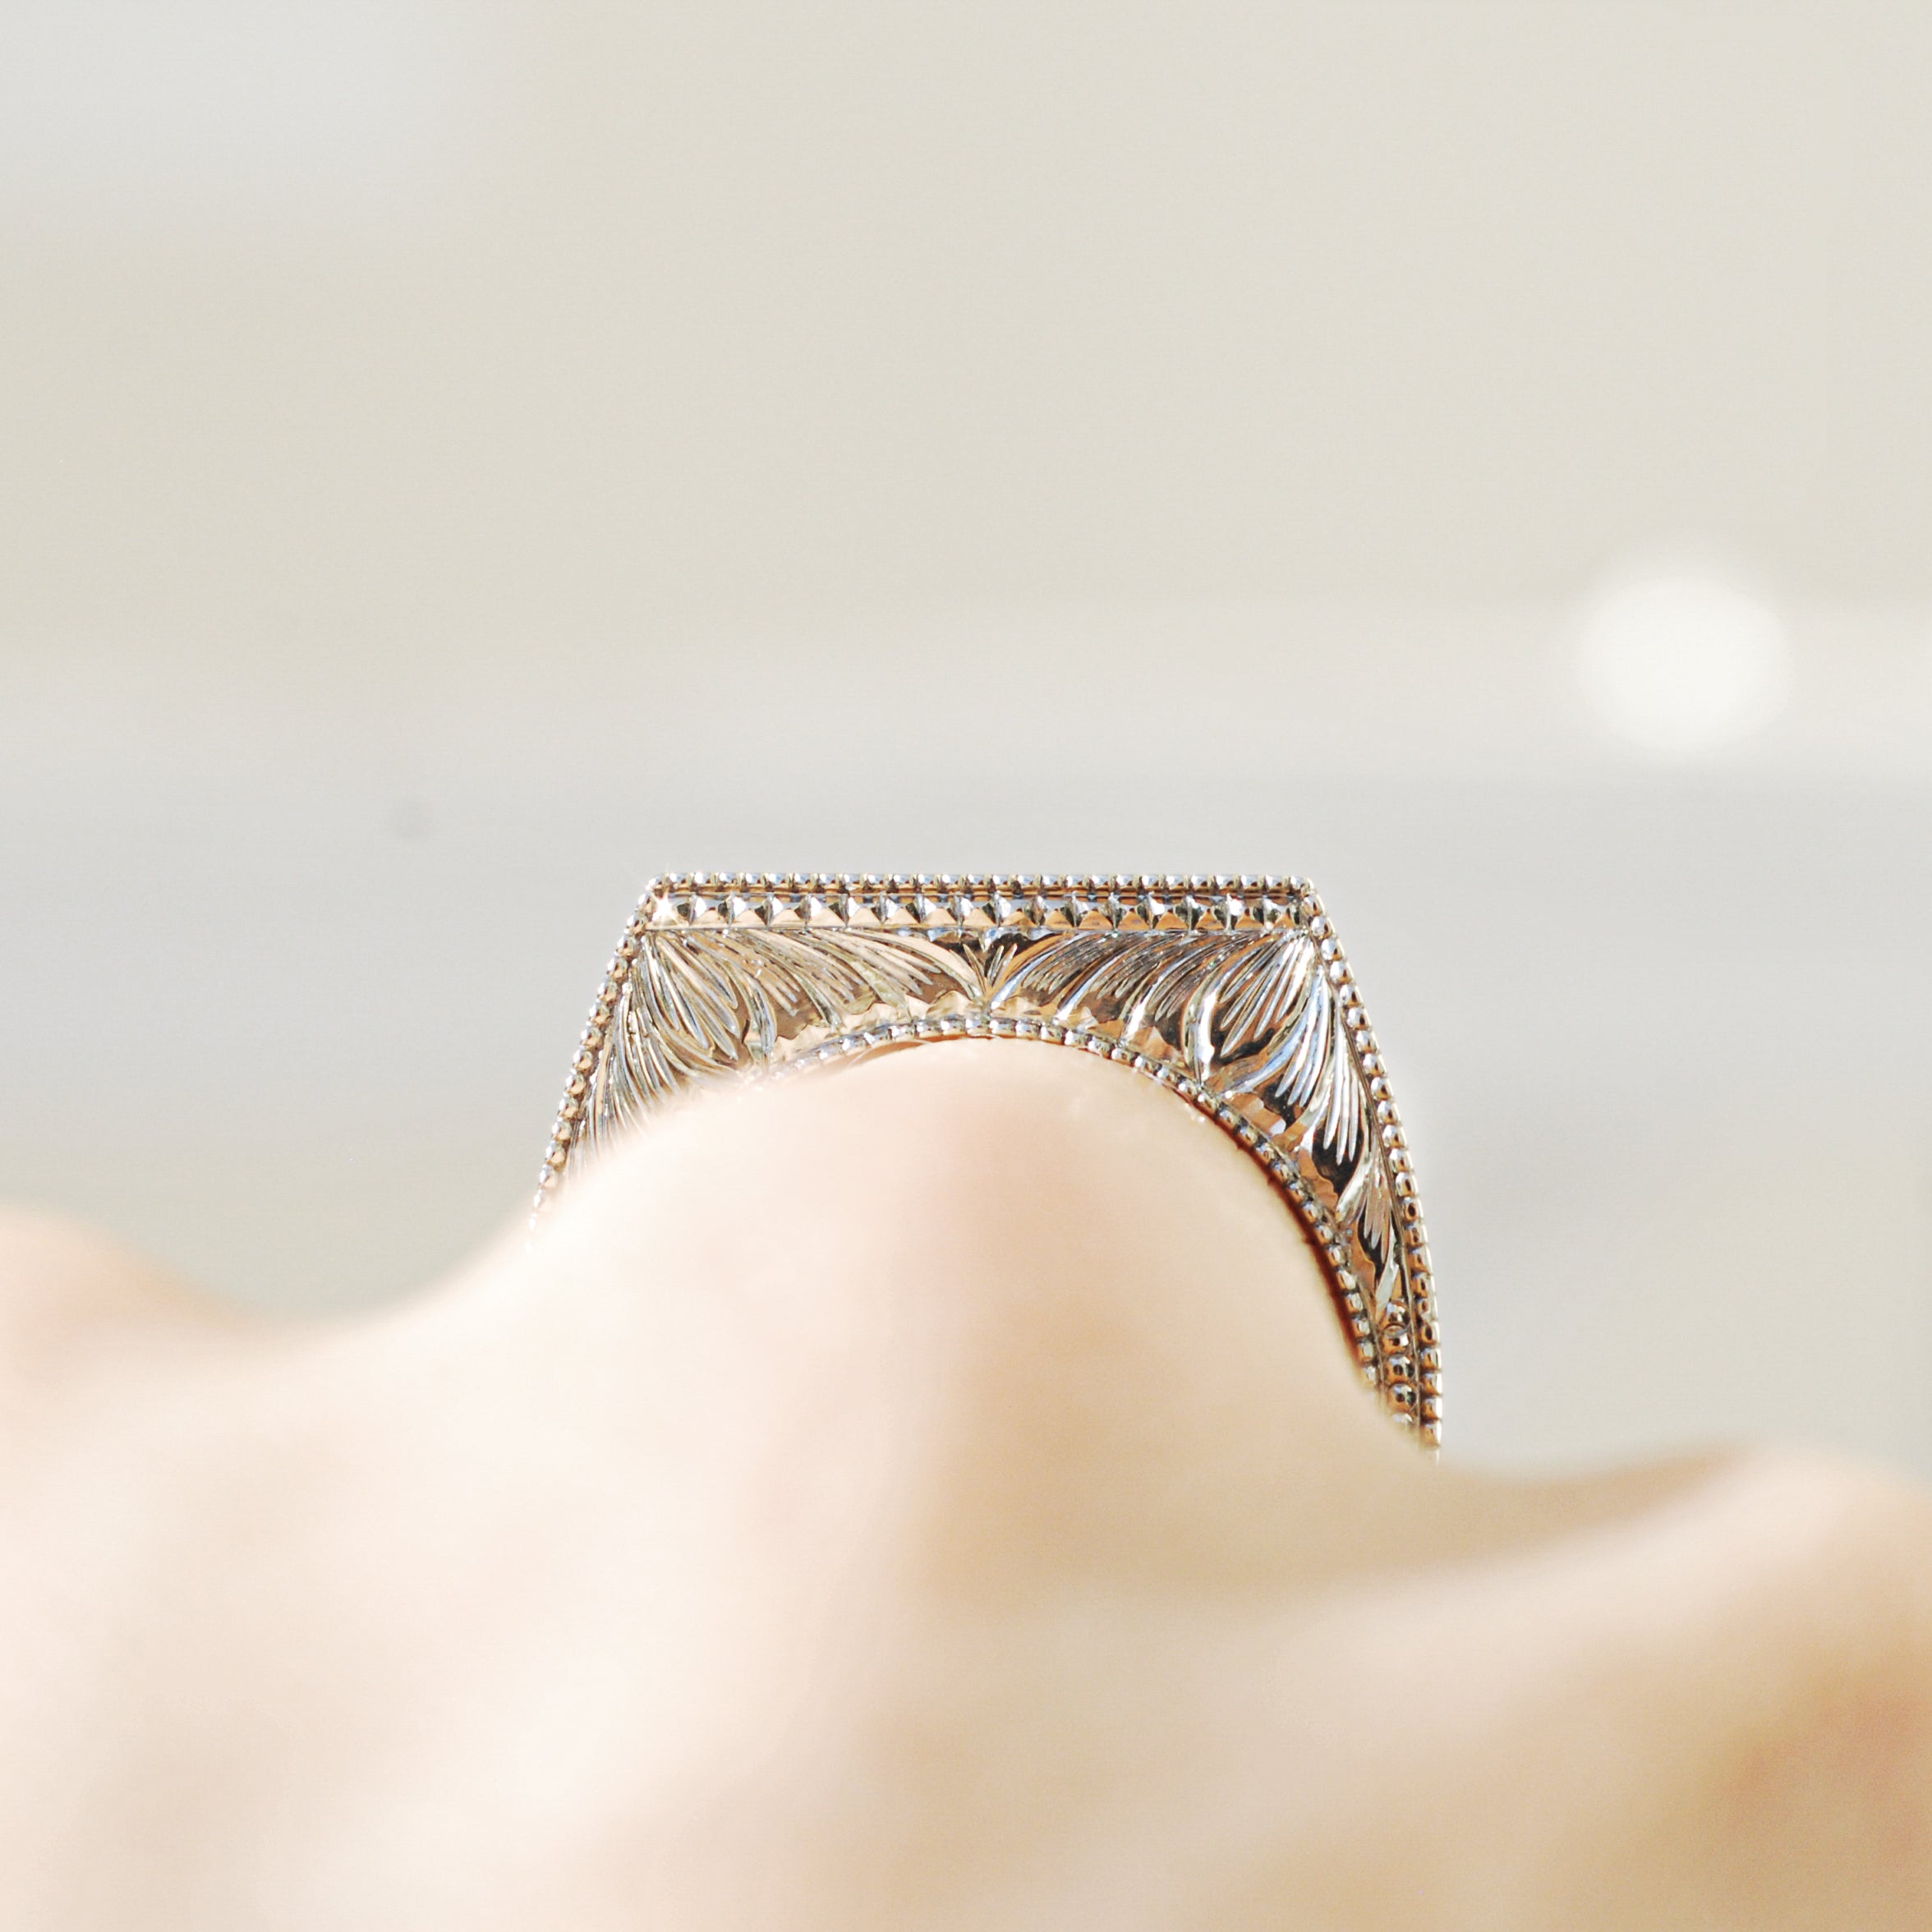 Square Engraved Mens Wedding Ring